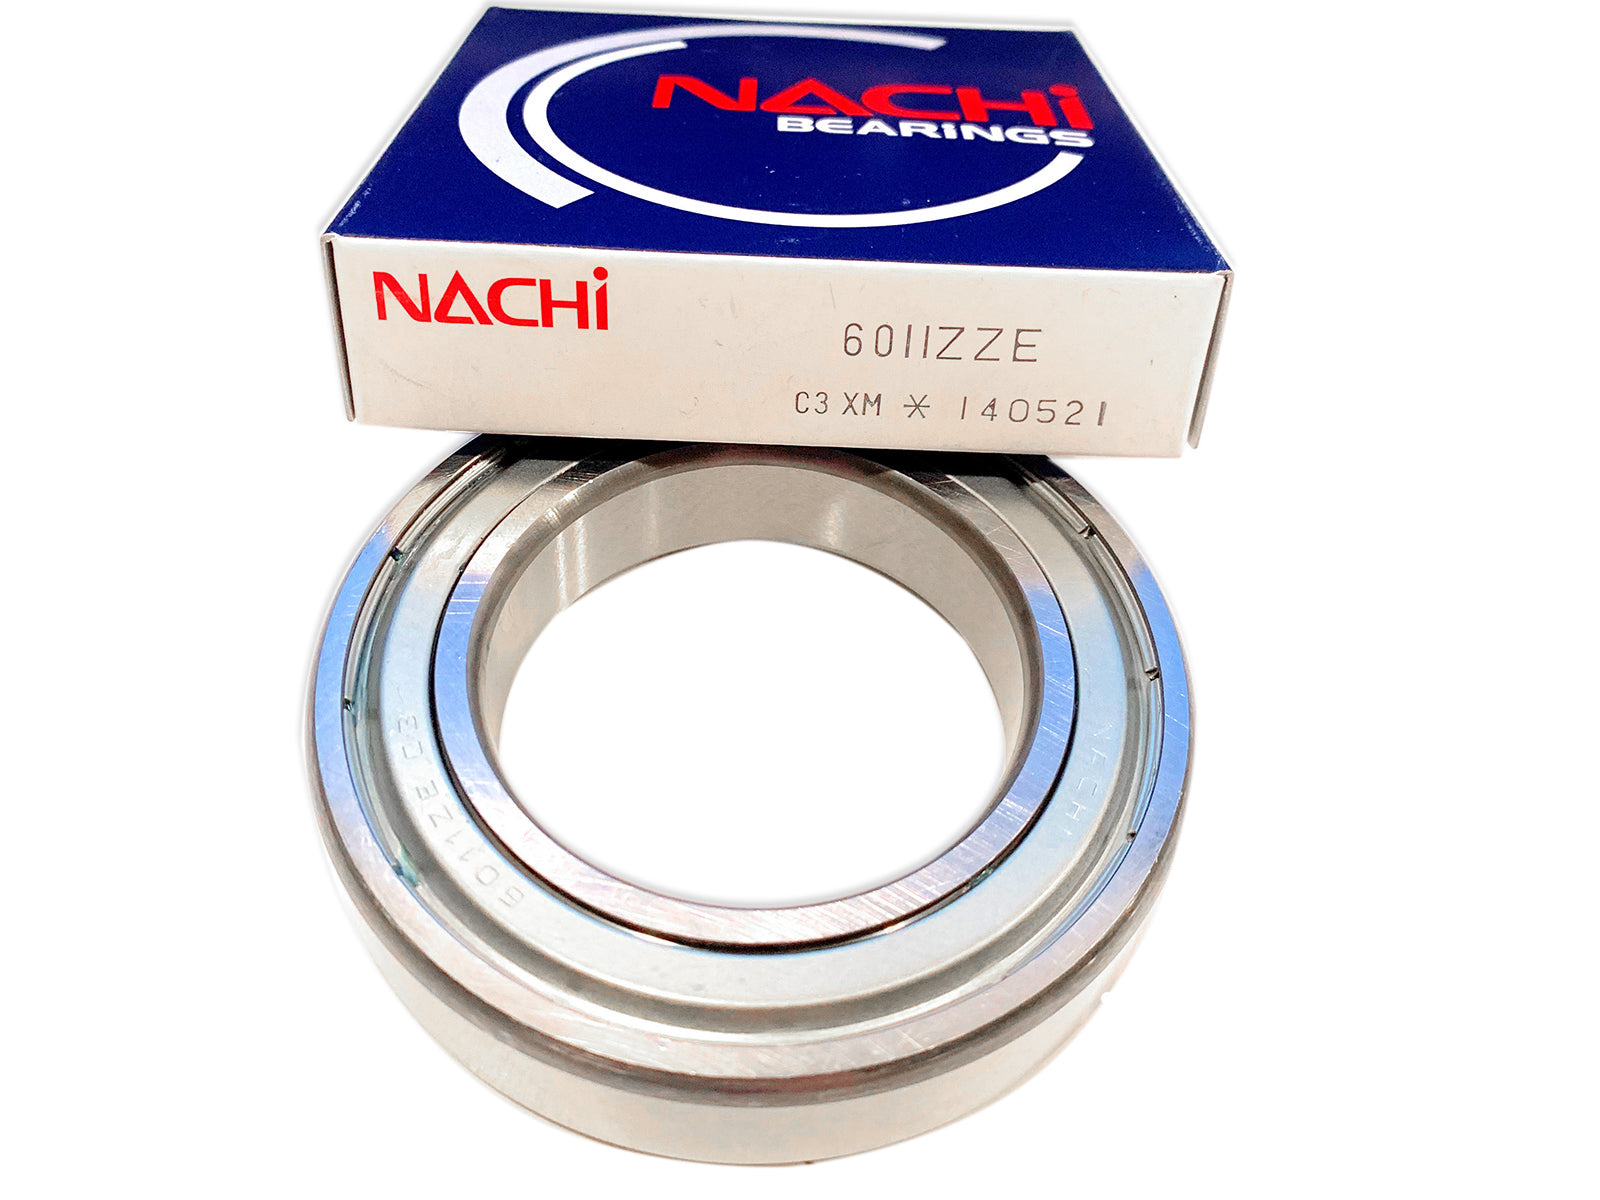 6011-ZZE C3 NACHI Ball Bearing - ppdistributors